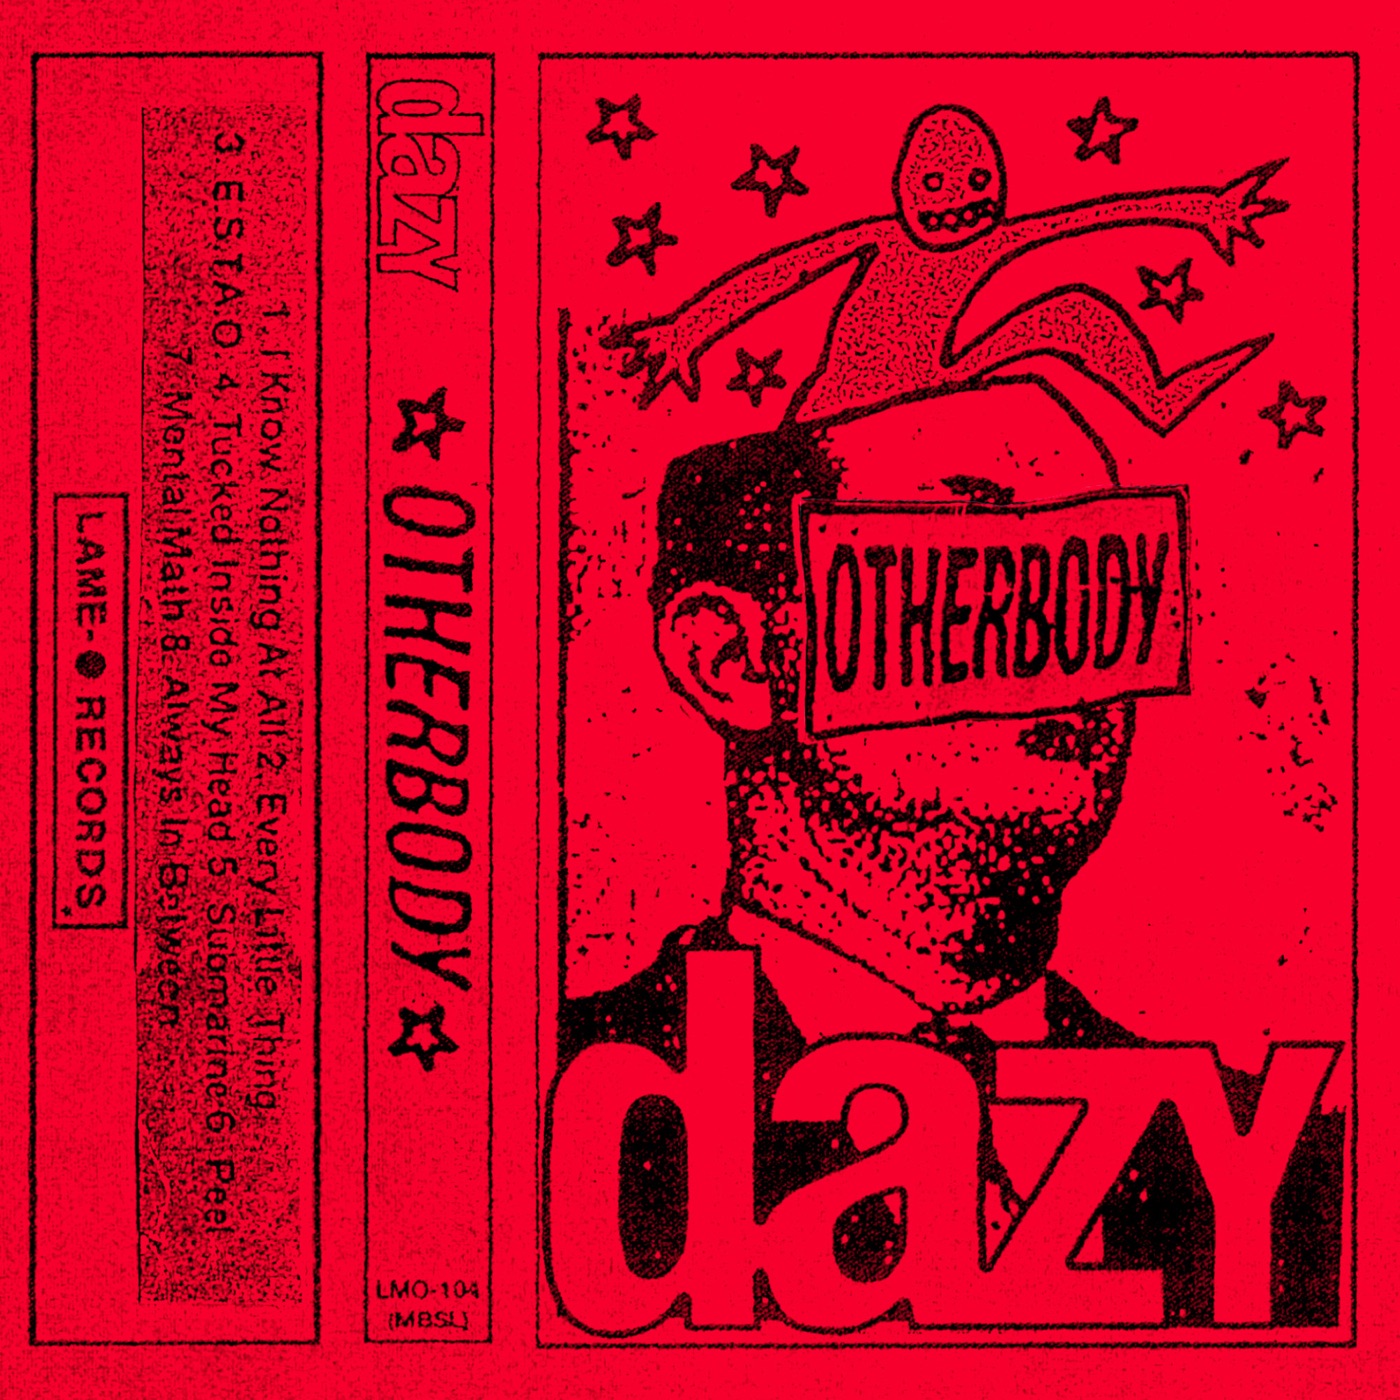 Otherbody by Dazy